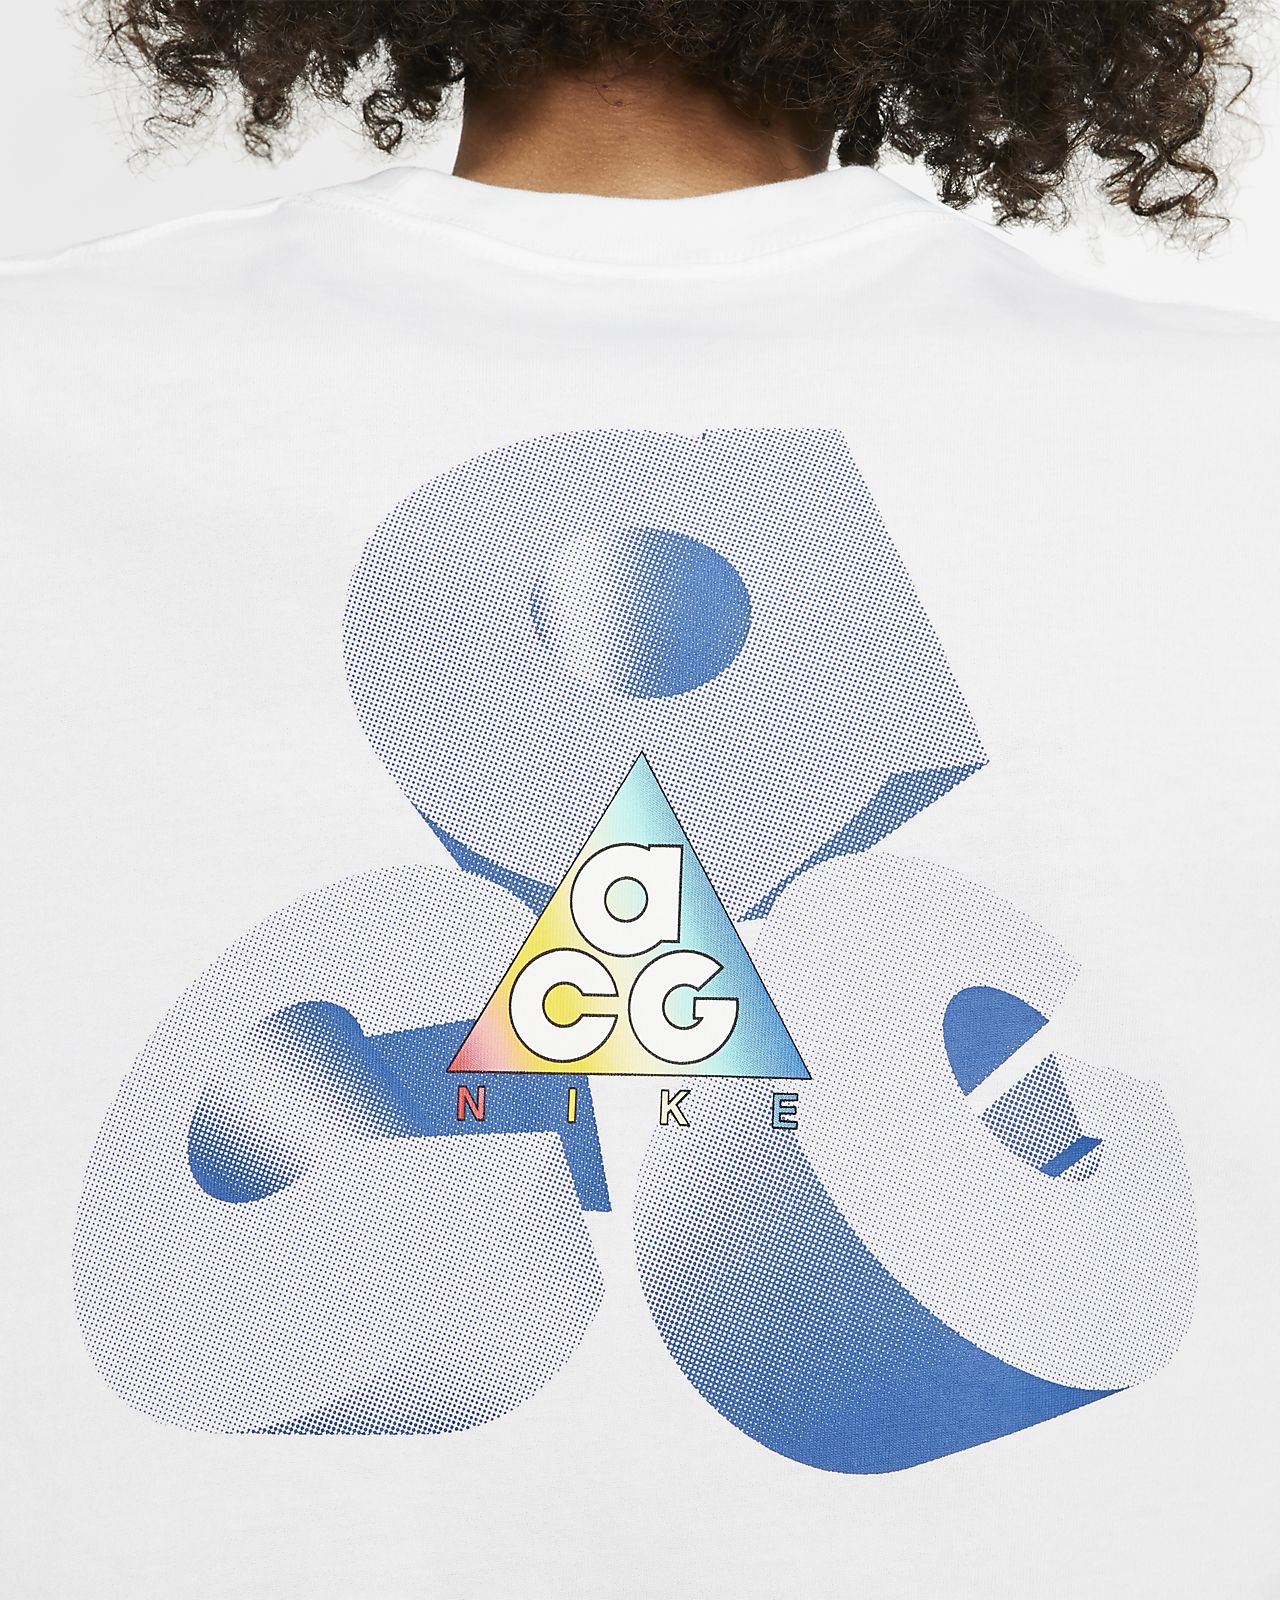 acg-mens-graphic-t-shirt-1x746H.jpg